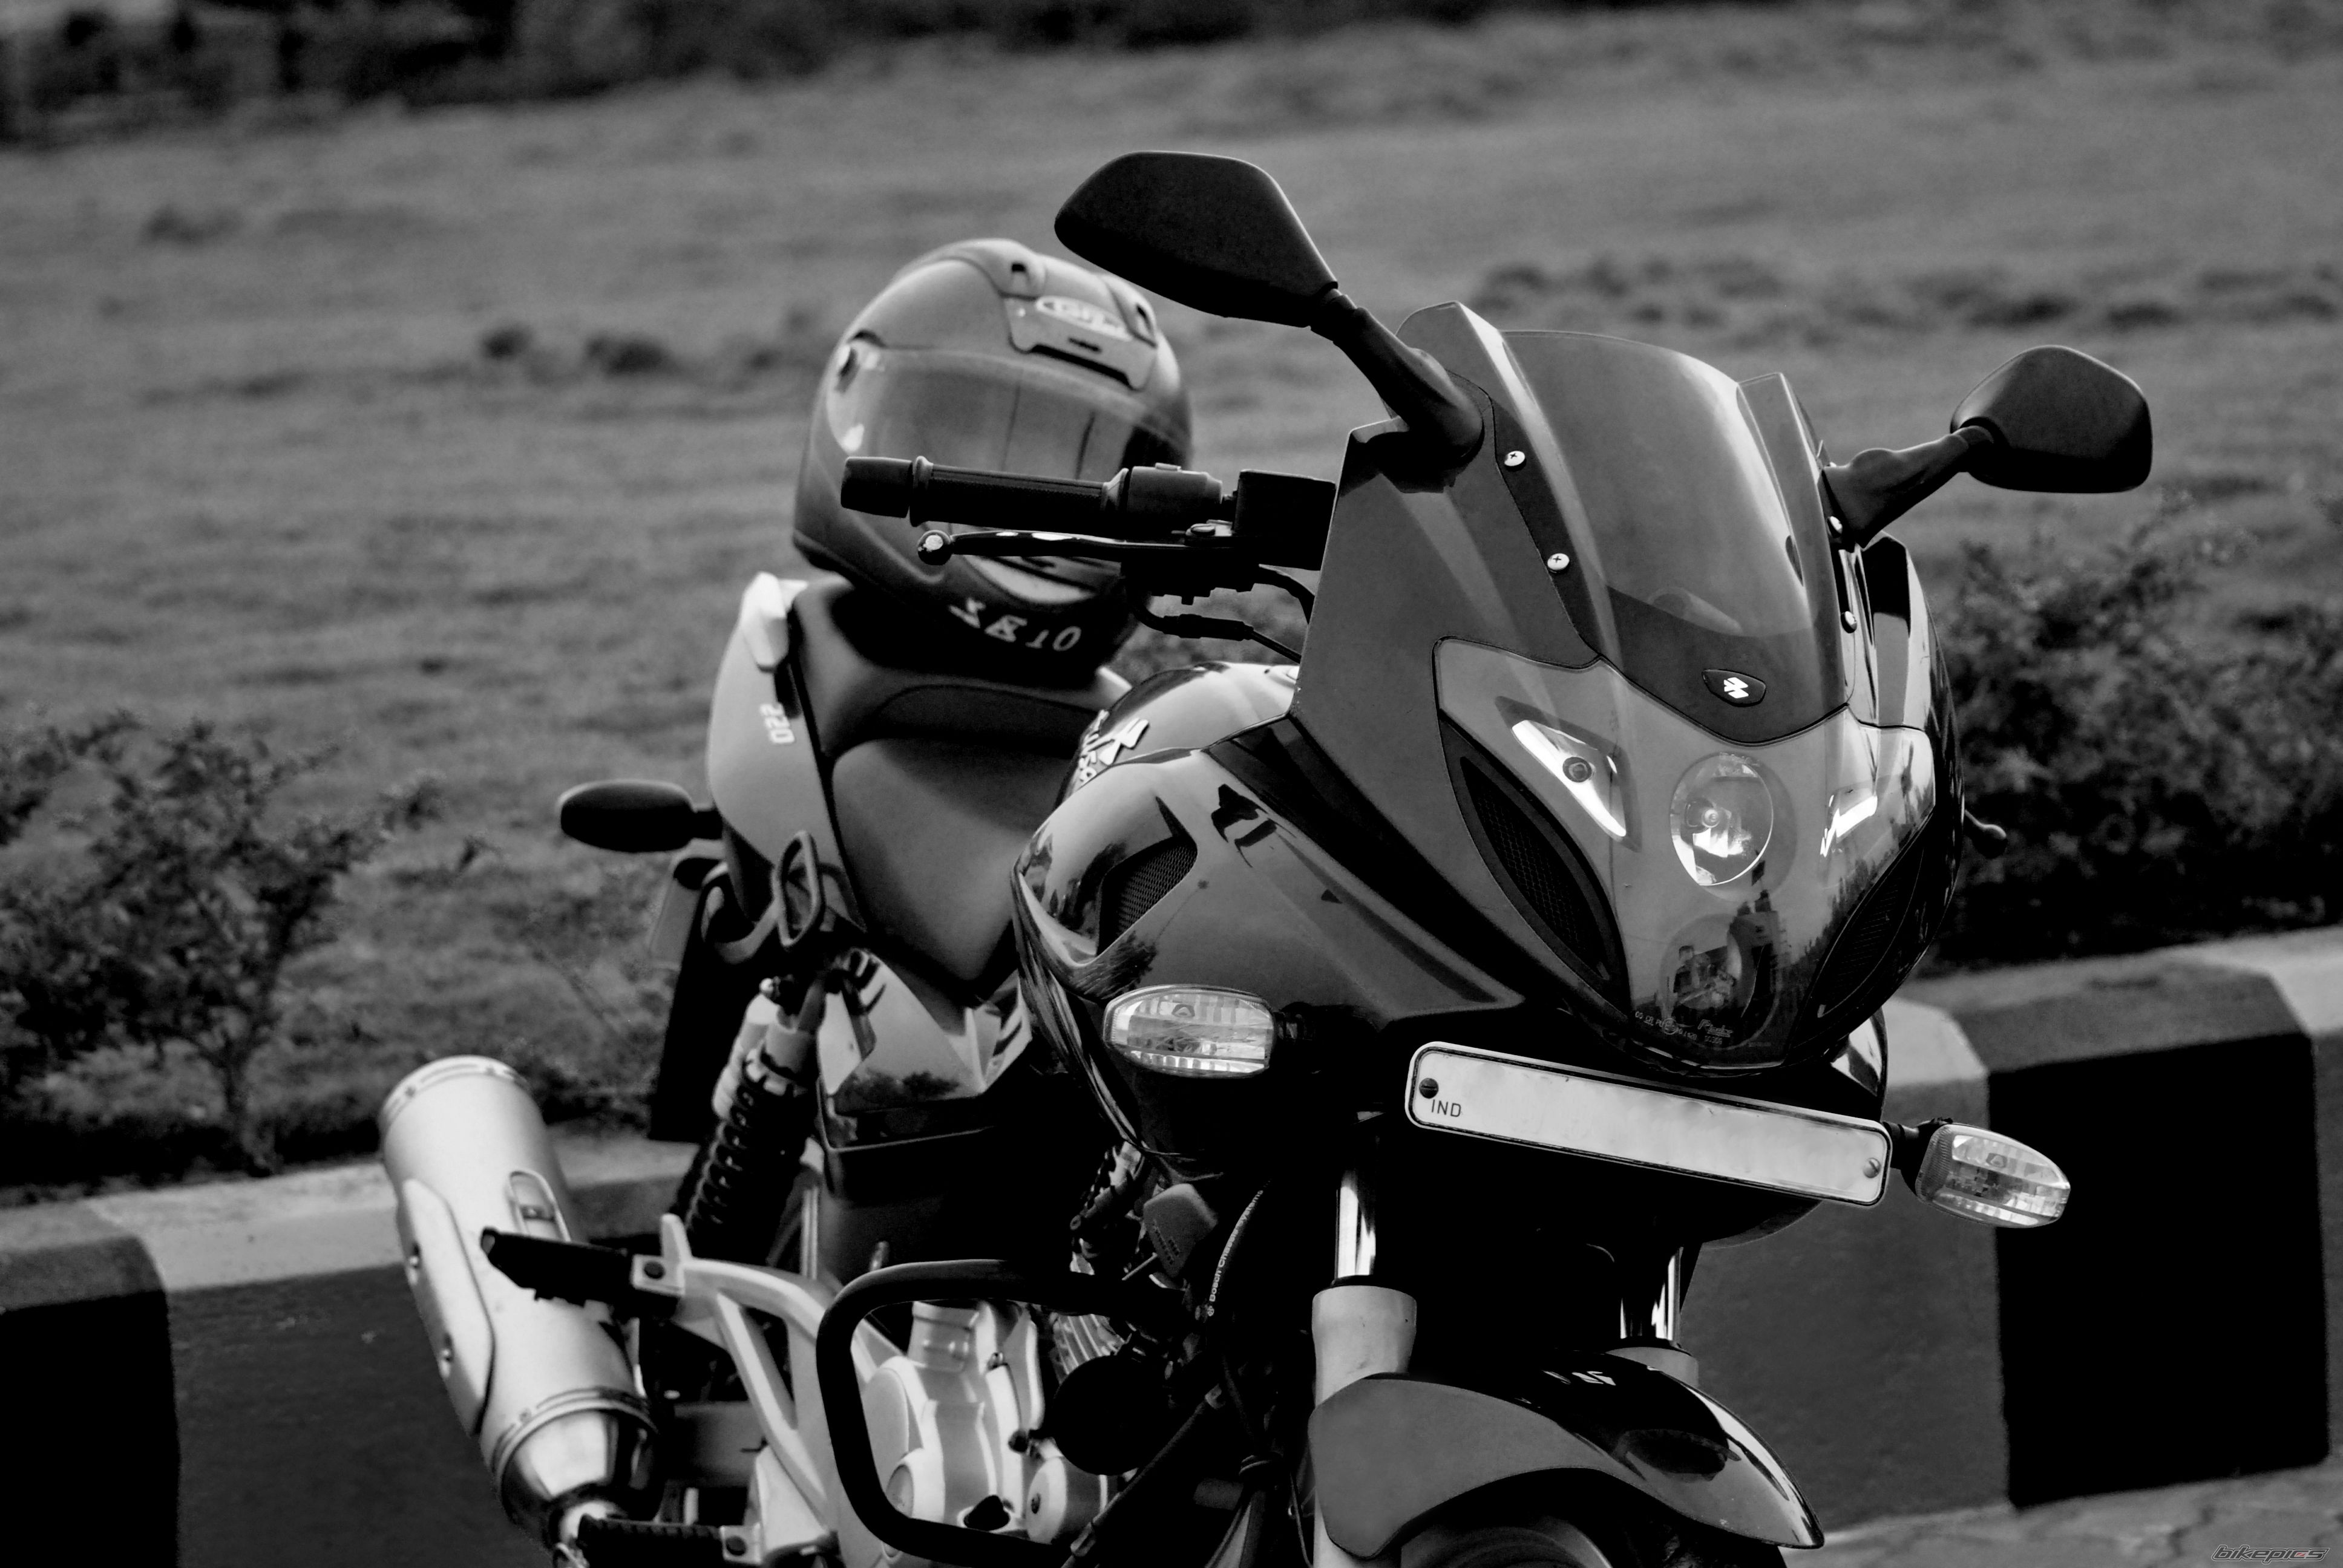 2007 Bajaj Pulsar 220 Dtsfi Motorcycle Photo - Pulsar 220 Full Black Hd , HD Wallpaper & Backgrounds